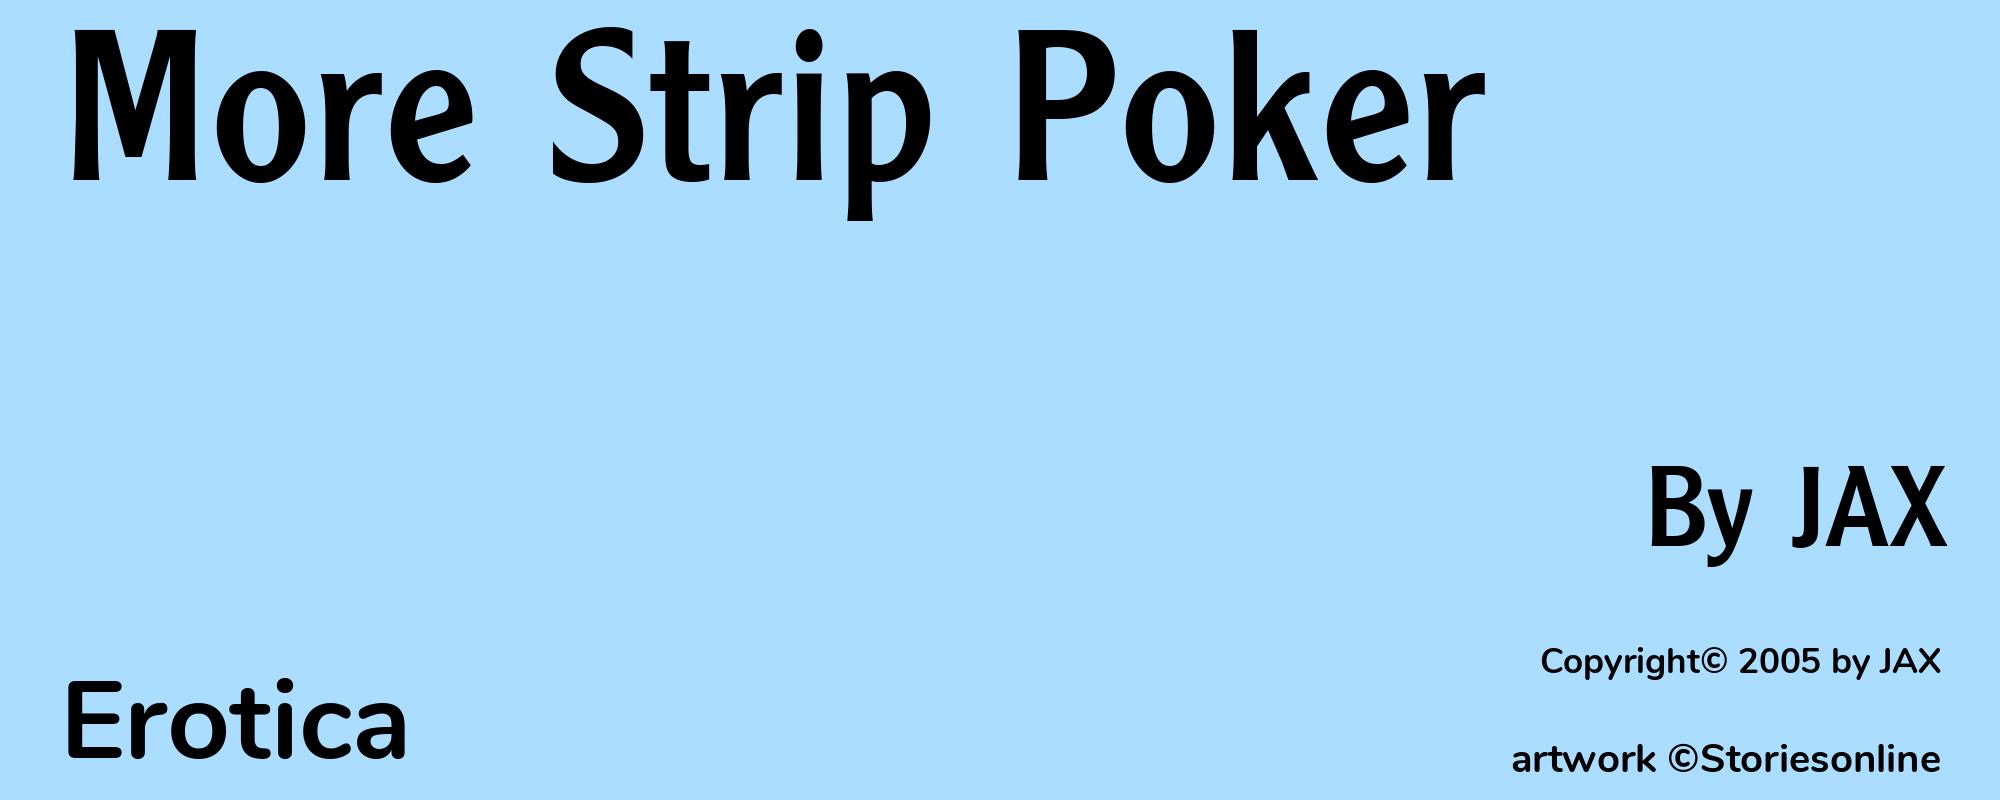 More Strip Poker - Cover